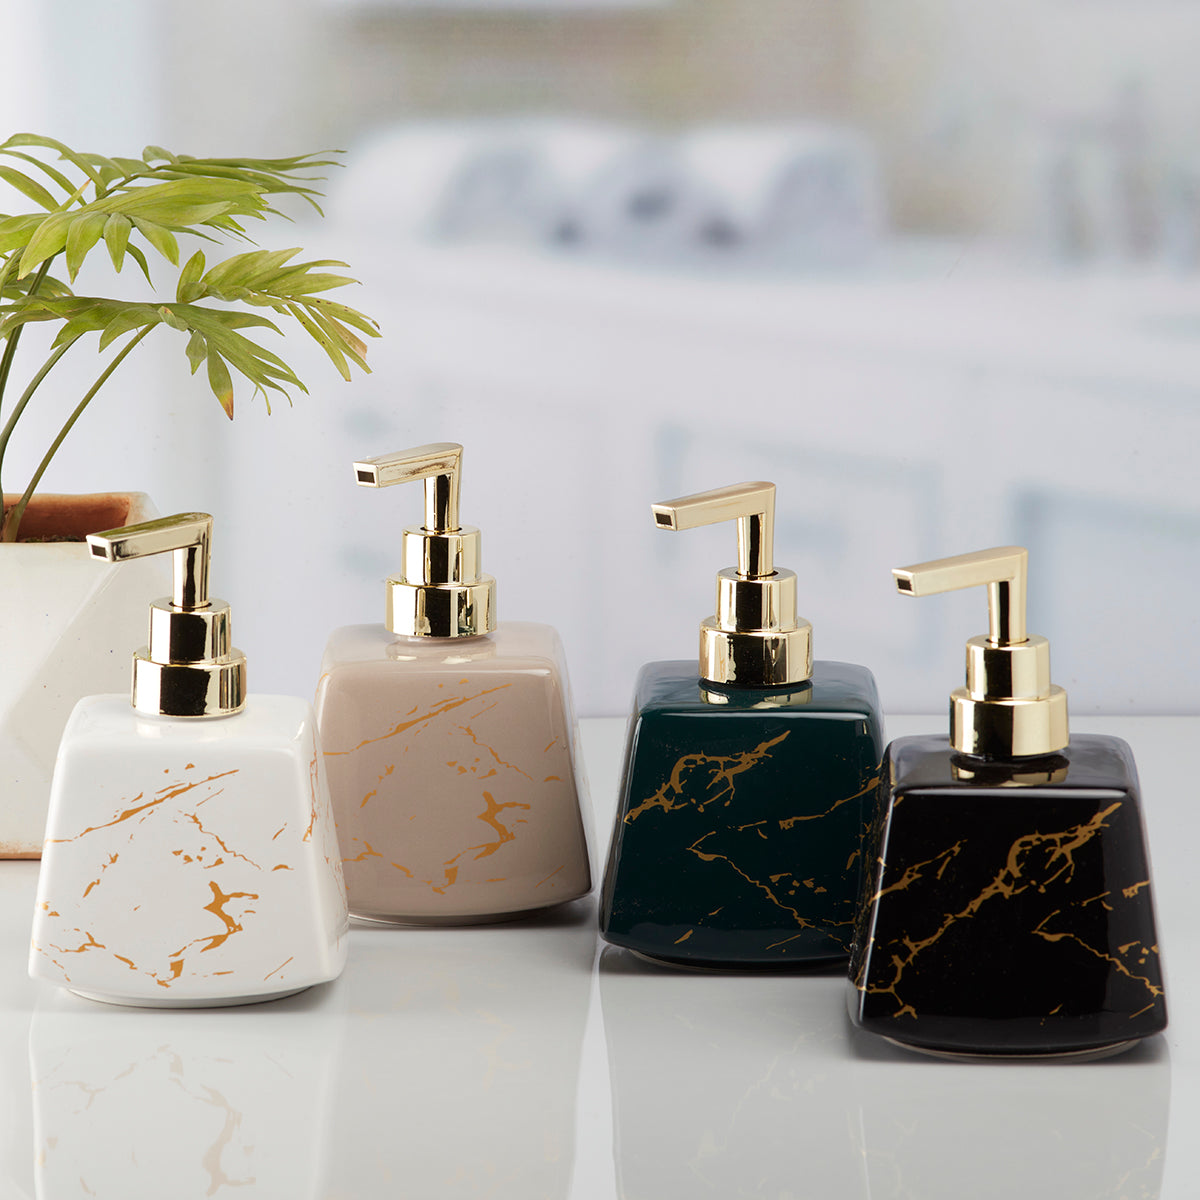 Ceramic Soap Dispenser handwash Pump for Bathroom, Set of 1, White/Gold (10154)